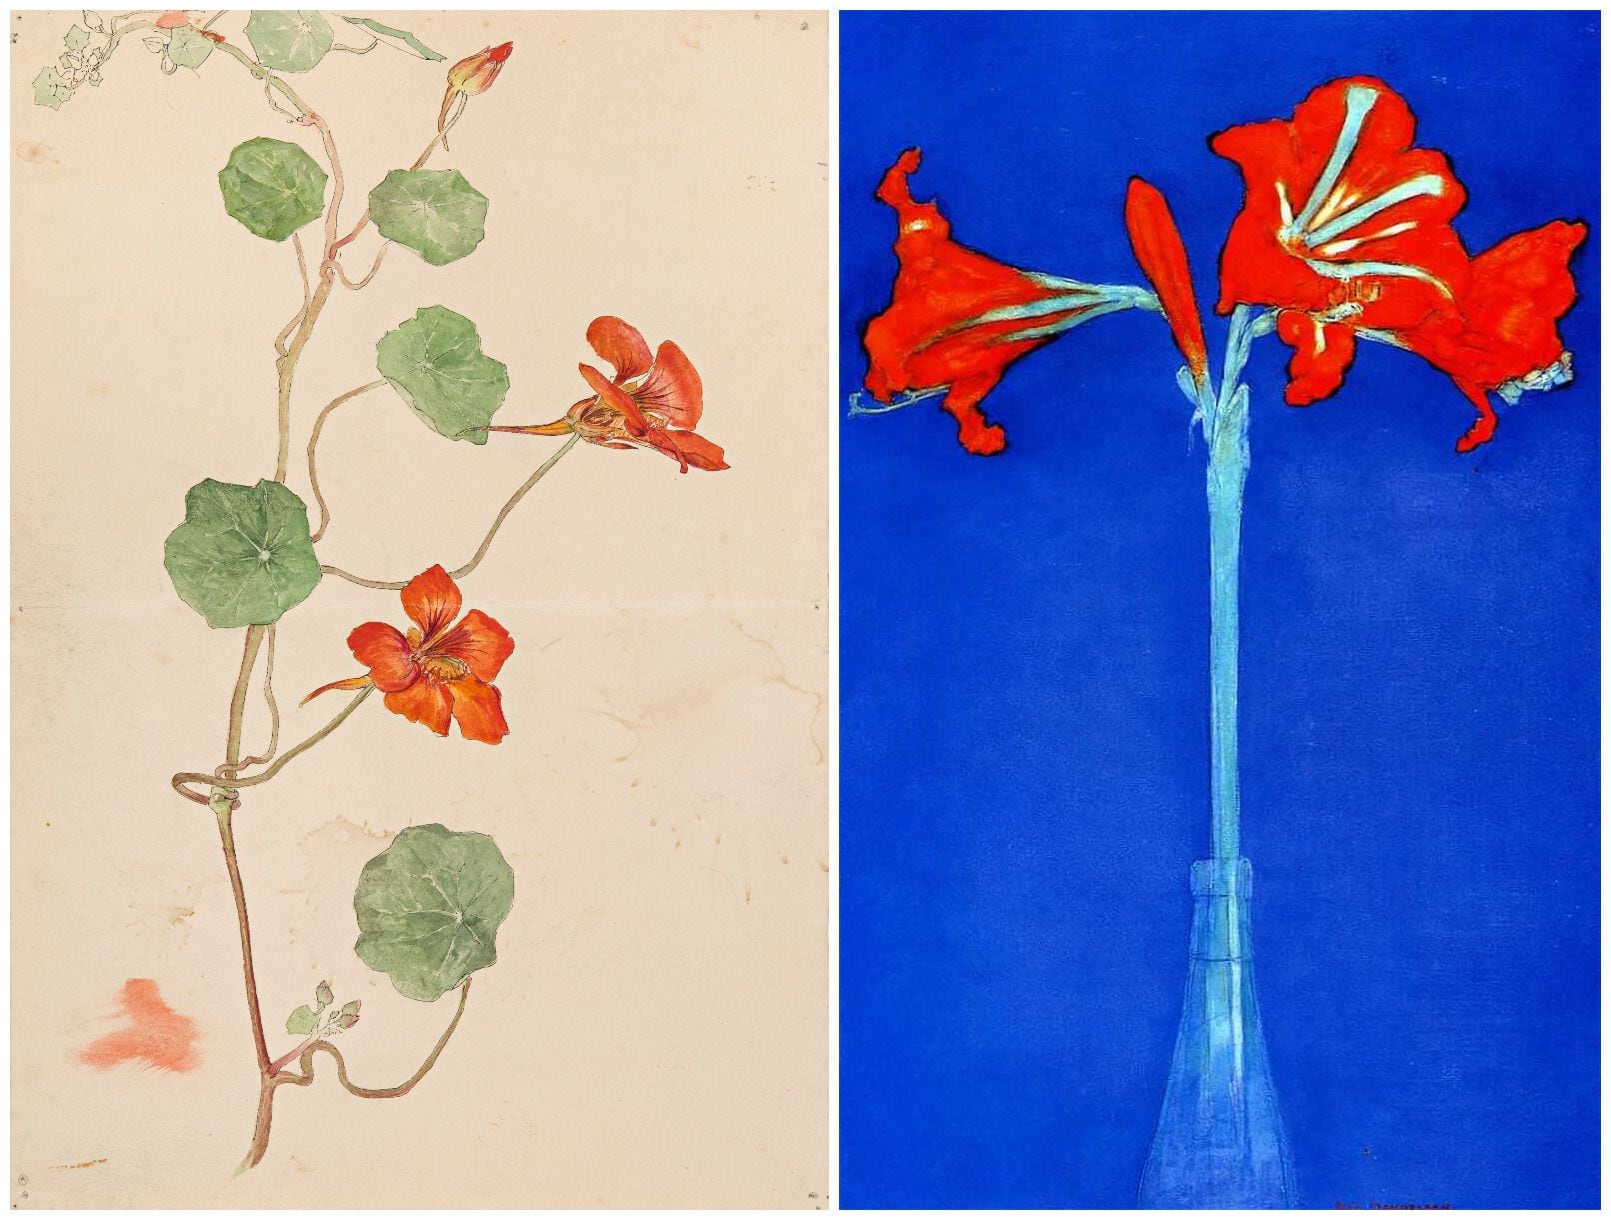 'Botanical Drawing' (1890), de Hilma af Klint, y 'Red Amaryllis with blue background' (1909-10), de Piet Mondrian.